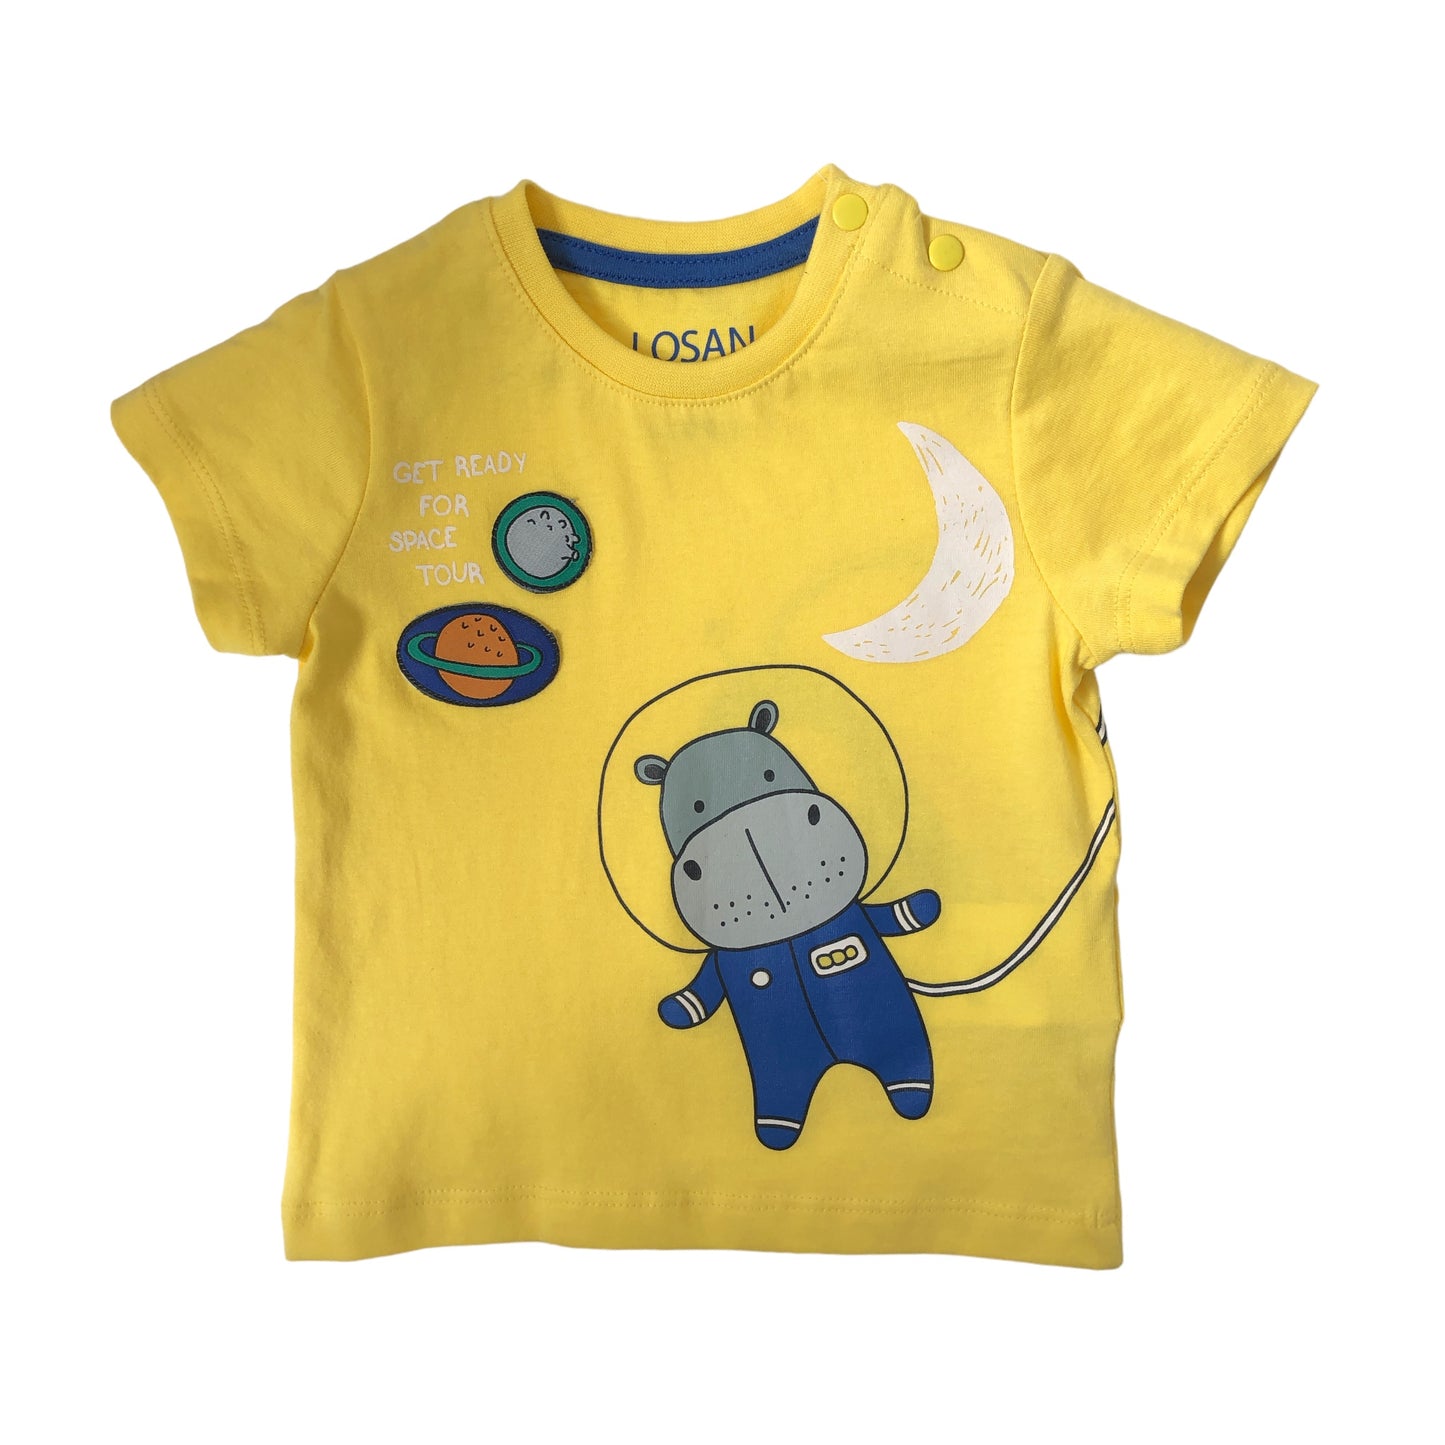 Playera amarilla manga corta “GET READY FOR SPACE TOUR” para bebé niño Losan